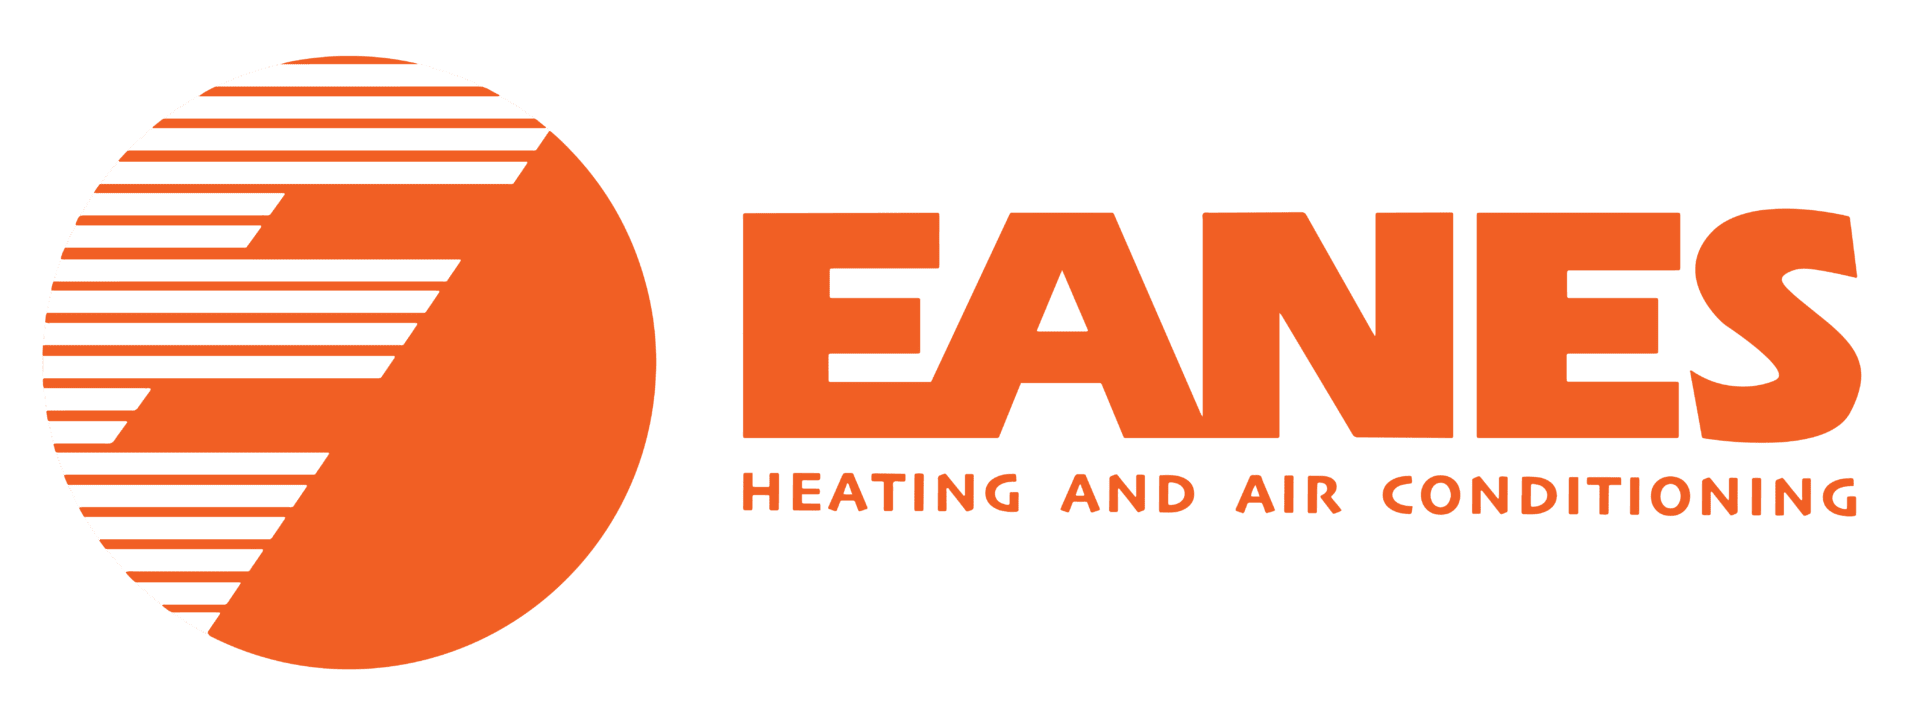 Ultimate HVAC Maintenance Checklist 2023 | Eanes Heating & Air